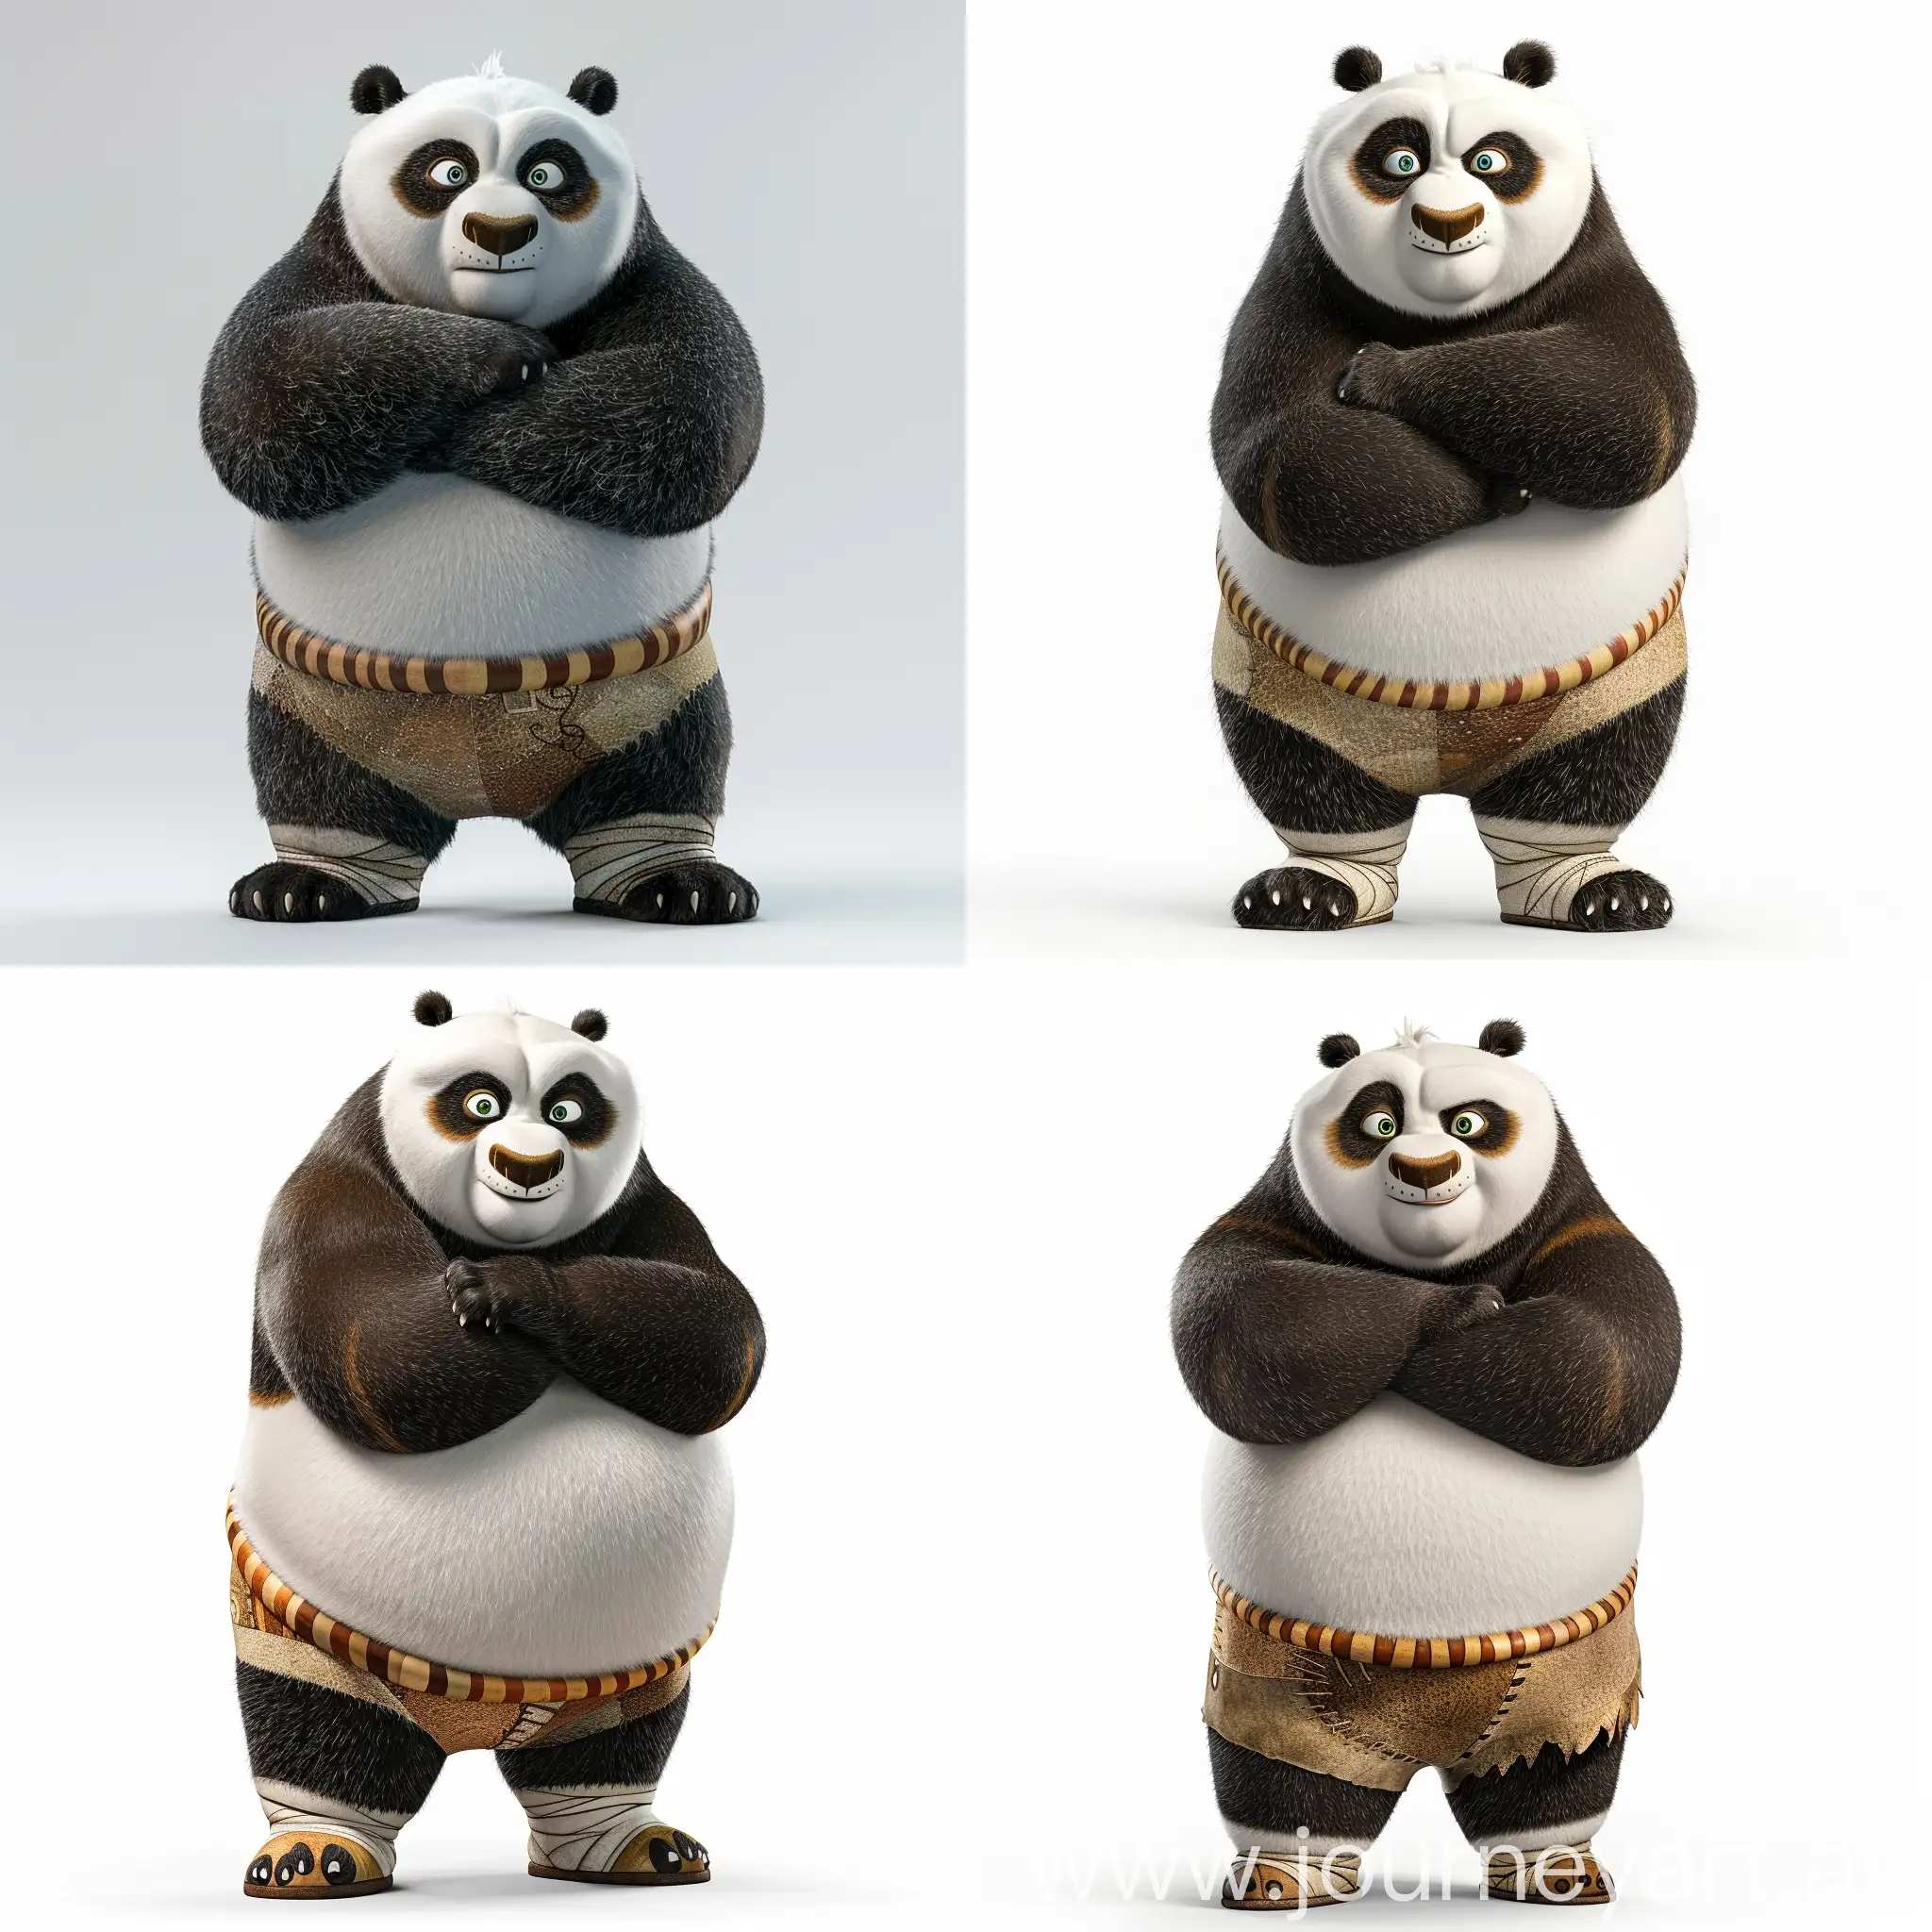 Kung-Fu-Panda-in-Serene-Pose-on-White-Background